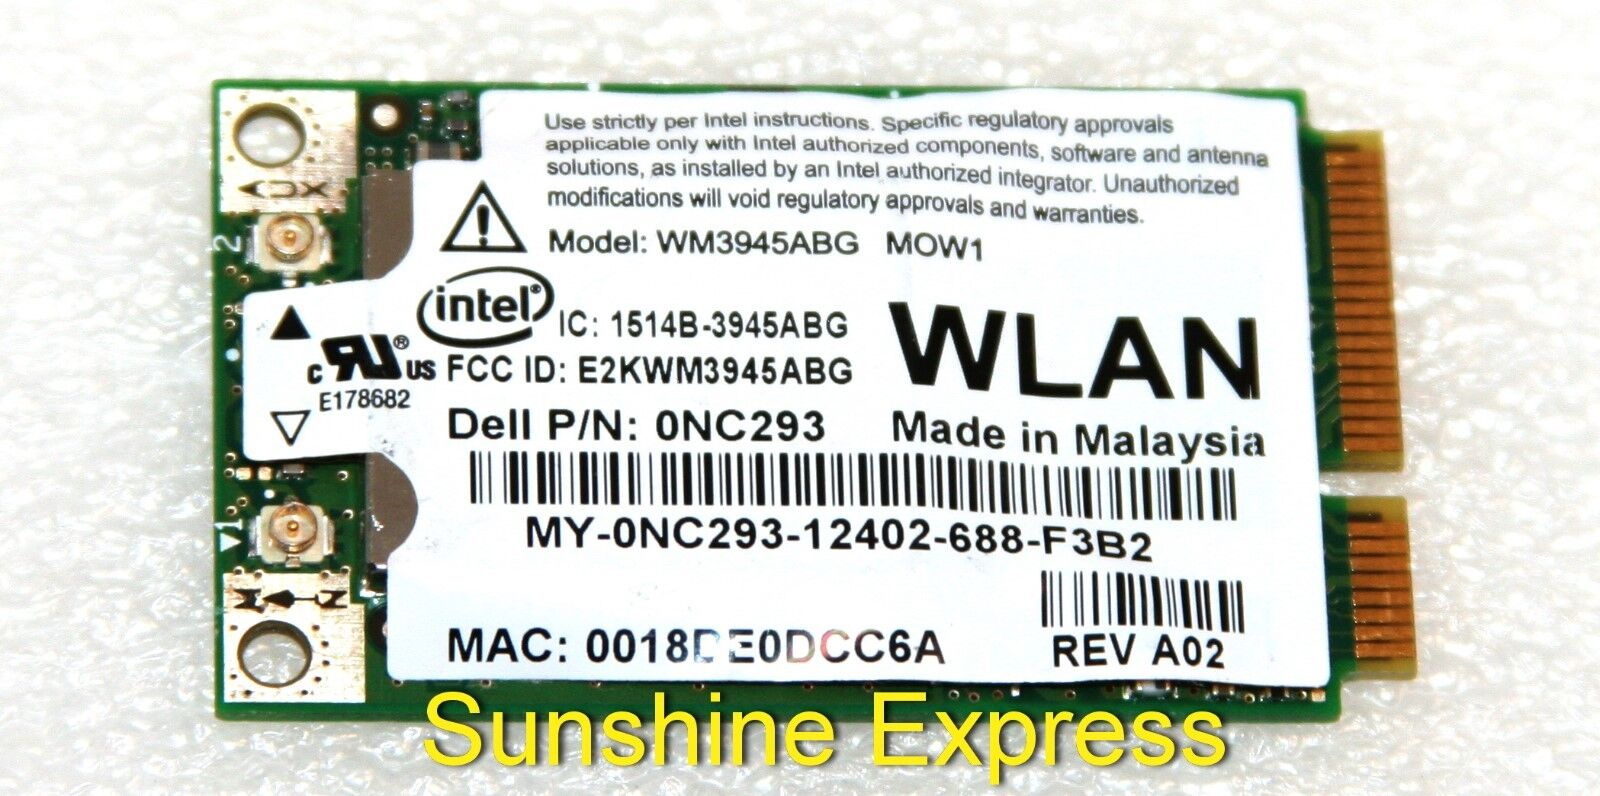 OEM Dell NC293 Intel PRO/Wireless 3945ABG 802.11a/b/g WLAN WiFi Card WM3945ABG